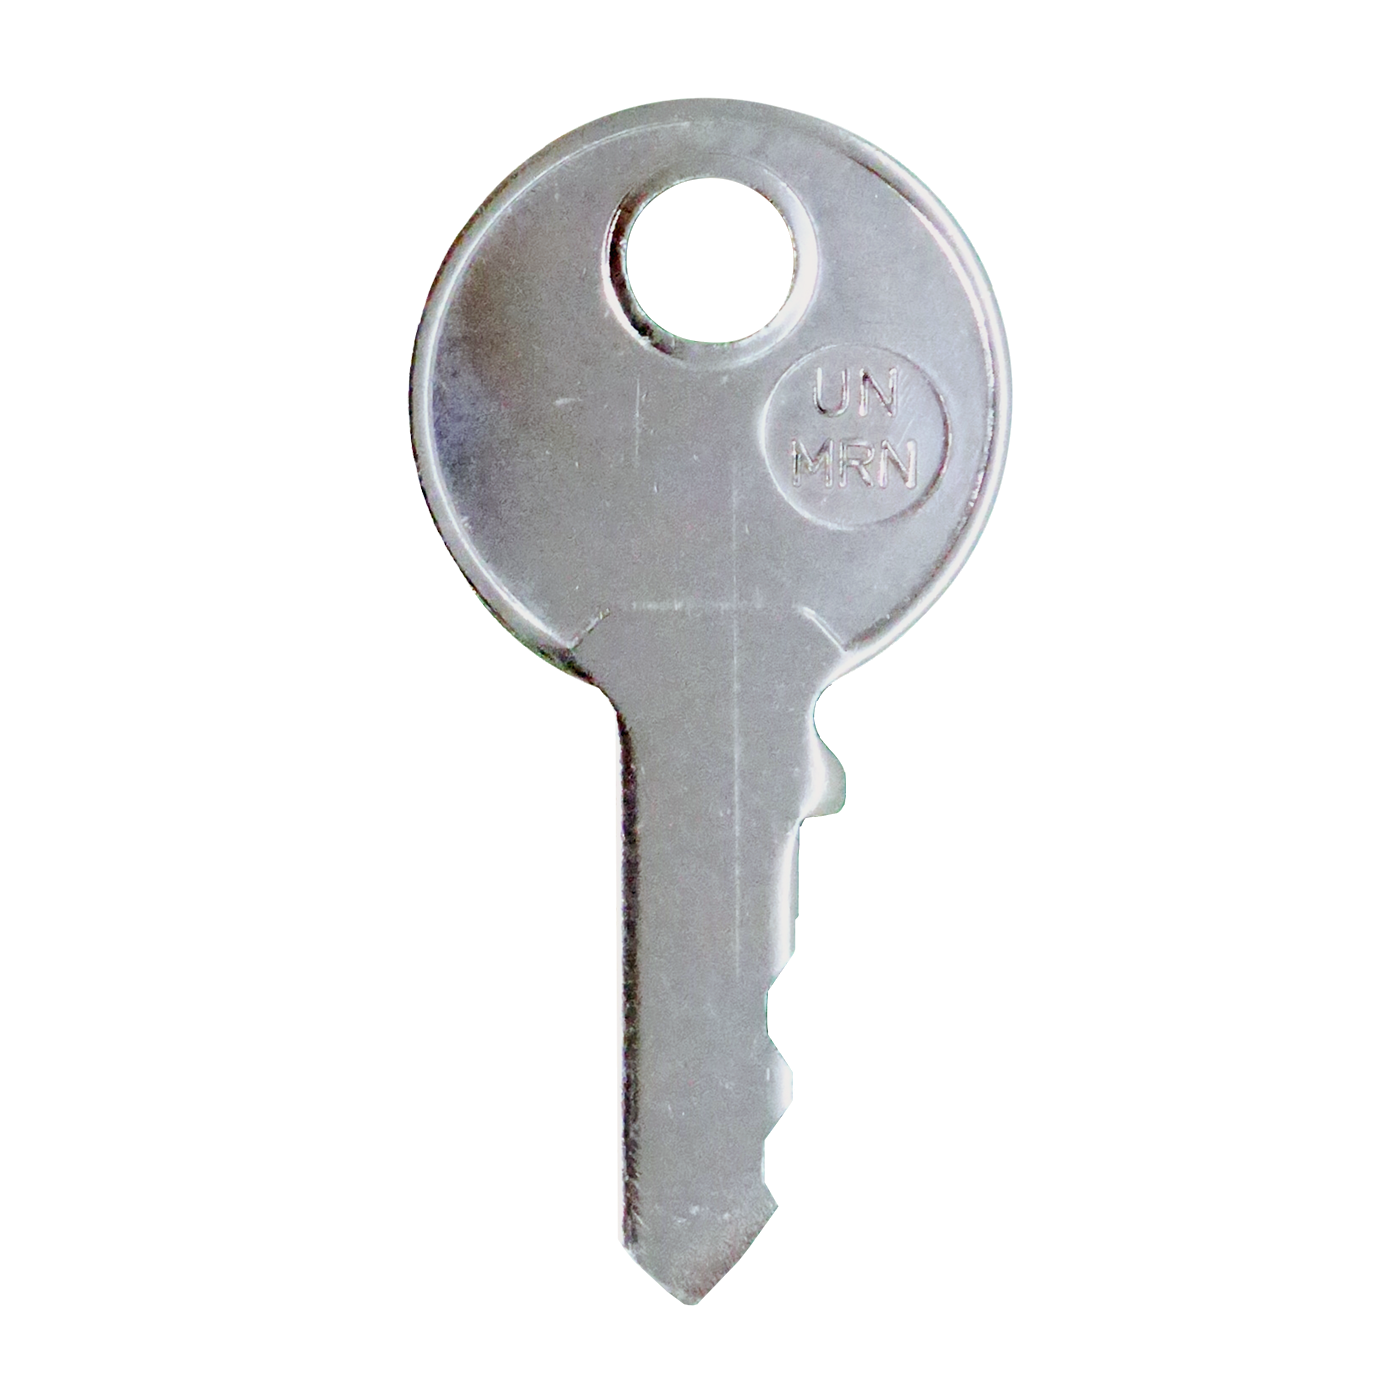 Chubb NS Series Keys